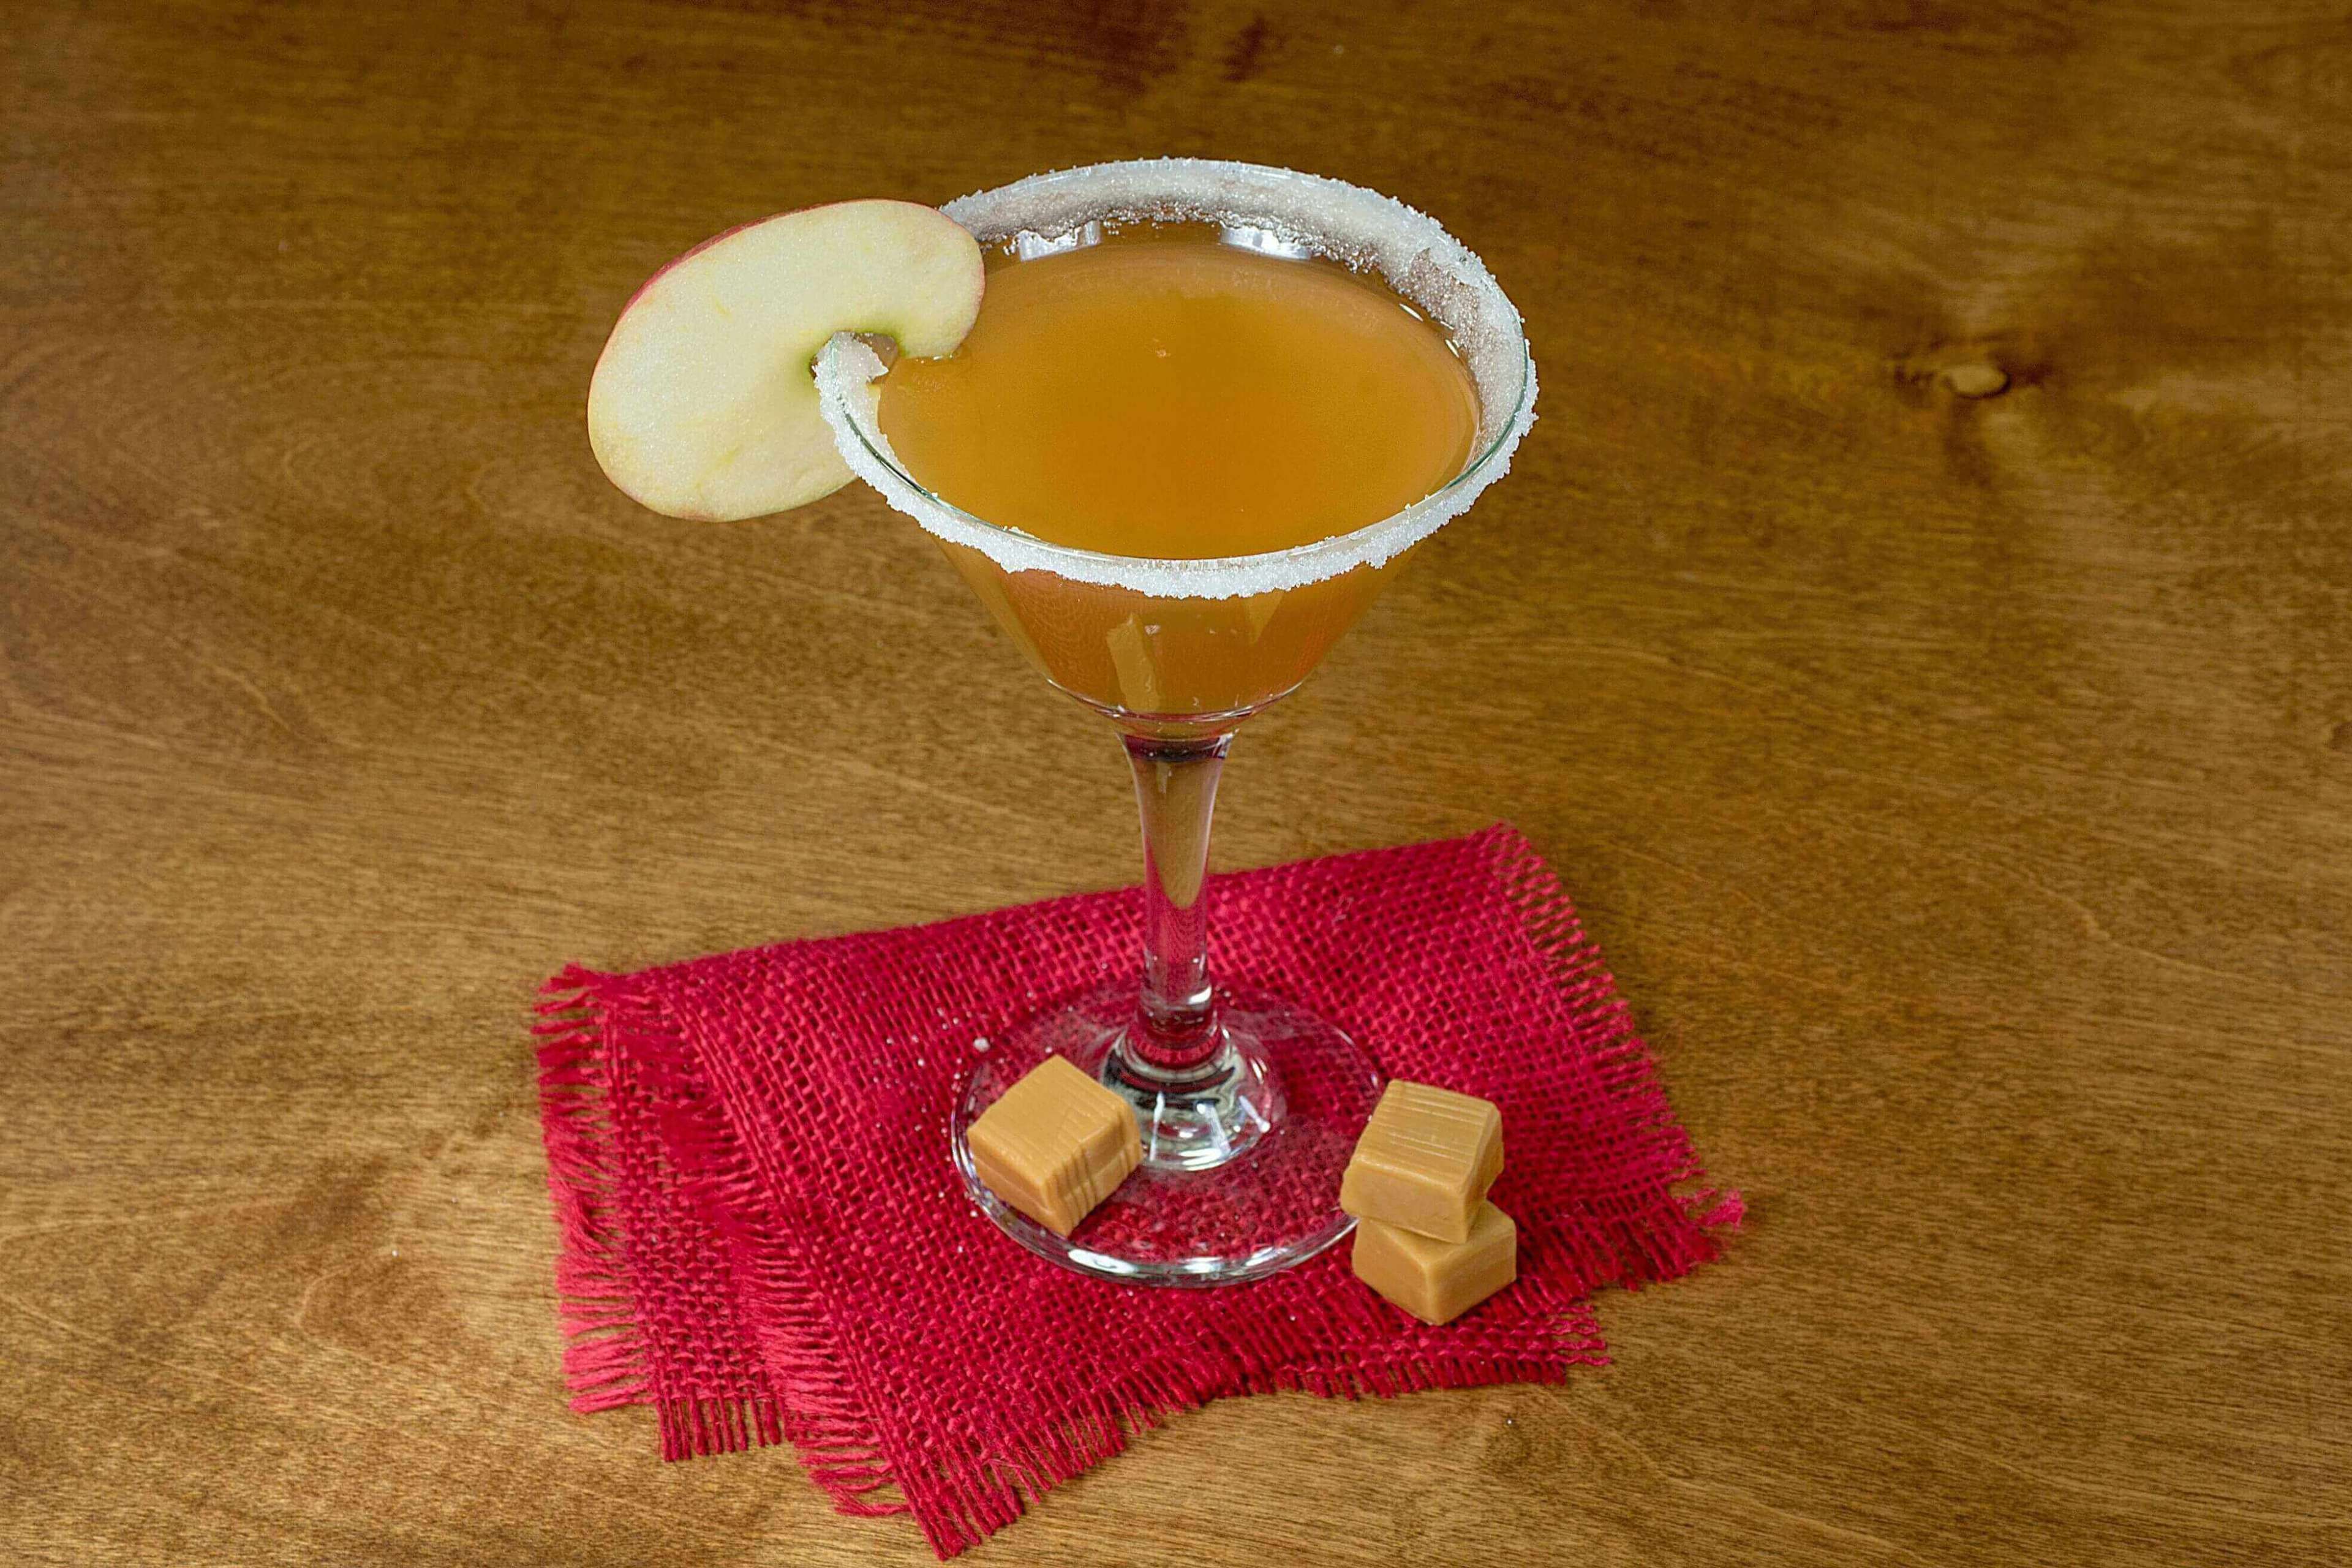 Apple caramel martini